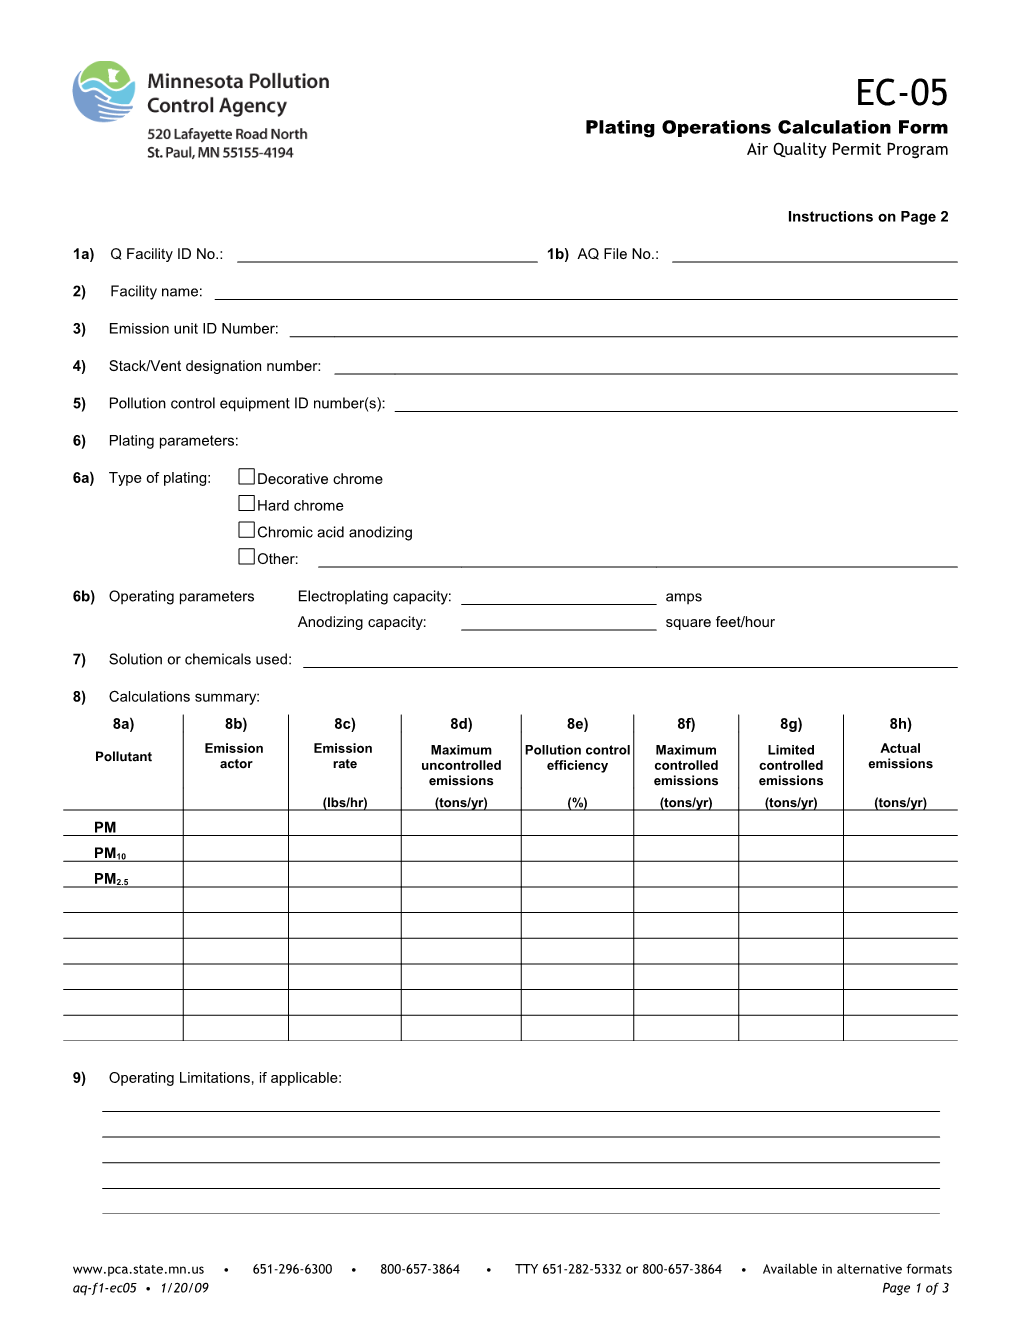 EC-05 Plating Operations Calculation Form - Air Quality Permit Program